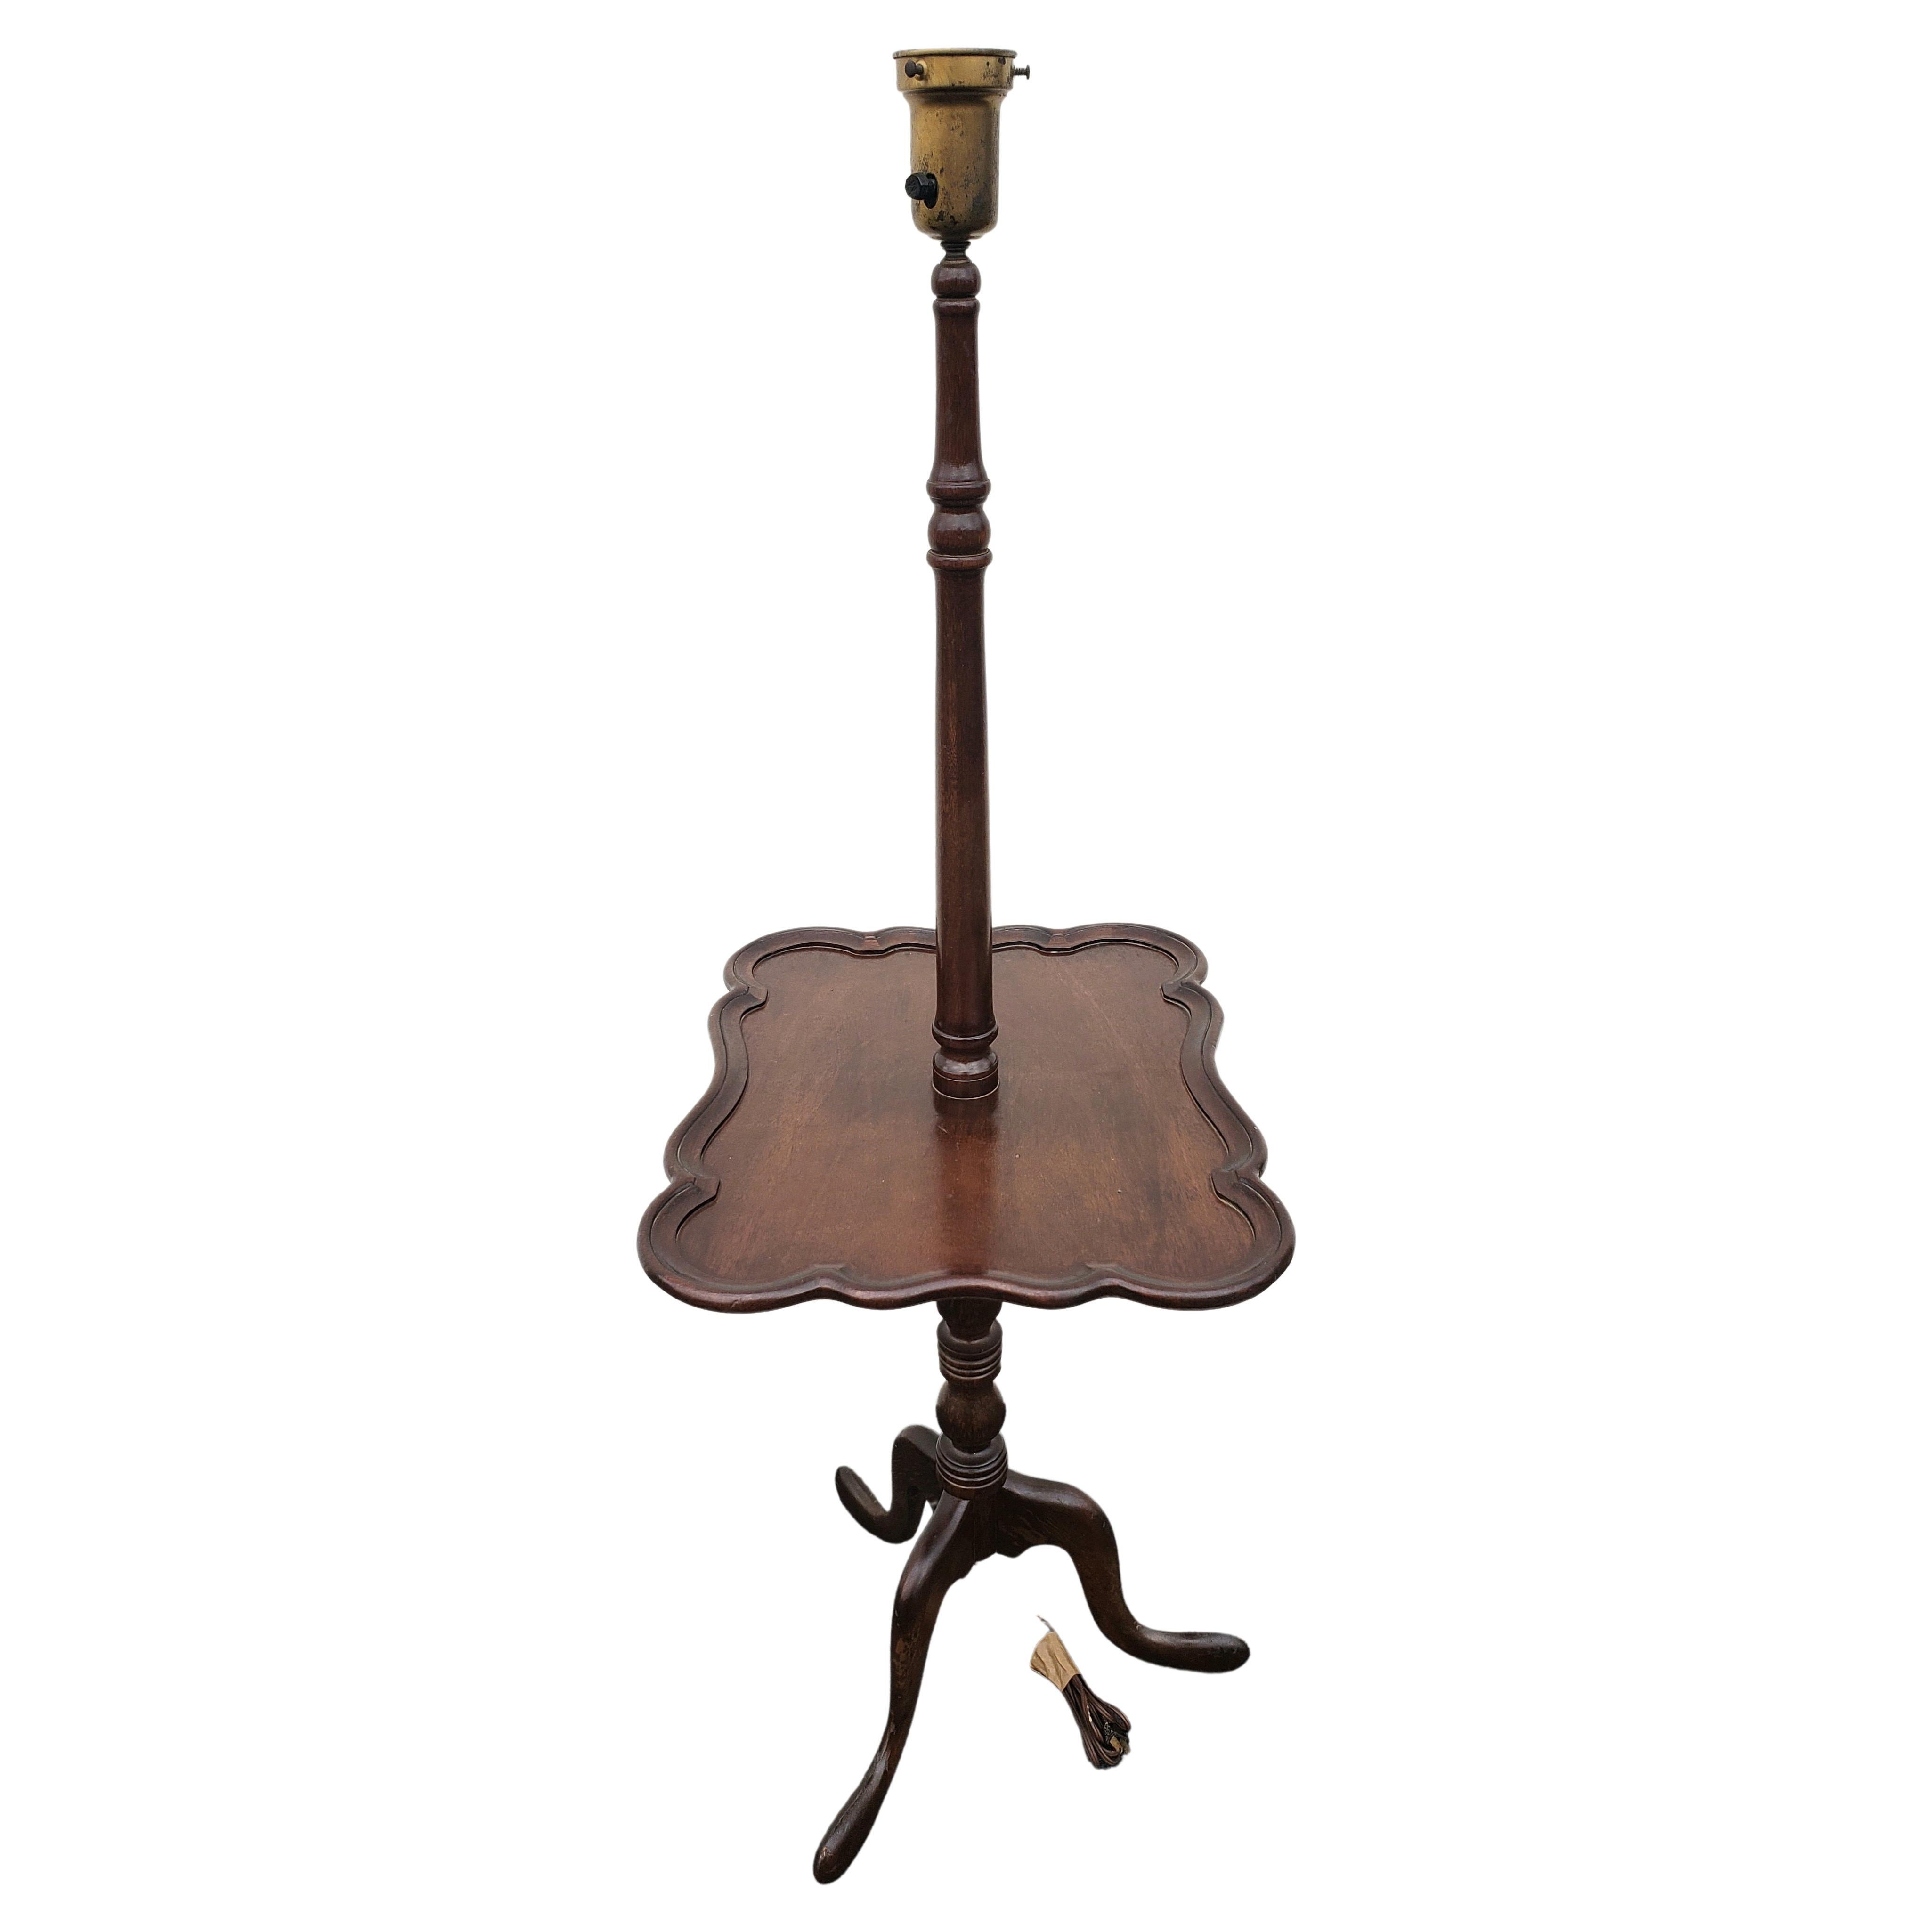 Very rare Vintage Chippendale mahogany torchiere floor lamp table, Circa 1940s. Mahogany Tripod pedestal base.
Measures 20